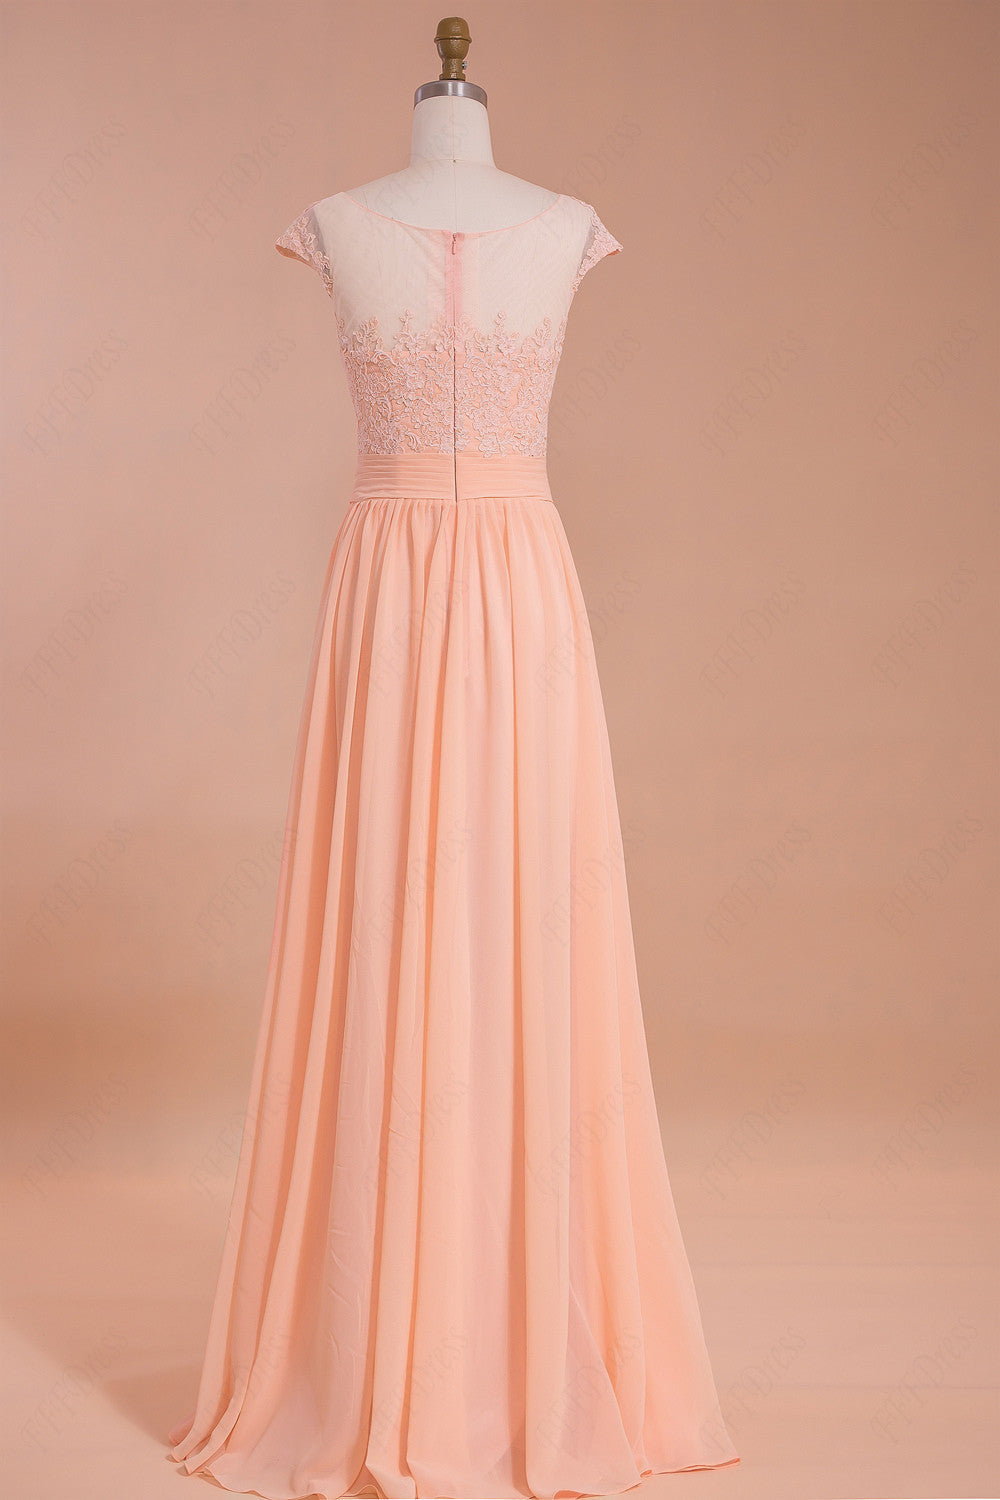 Peach color long modest prom dresses bridesmaid dresses